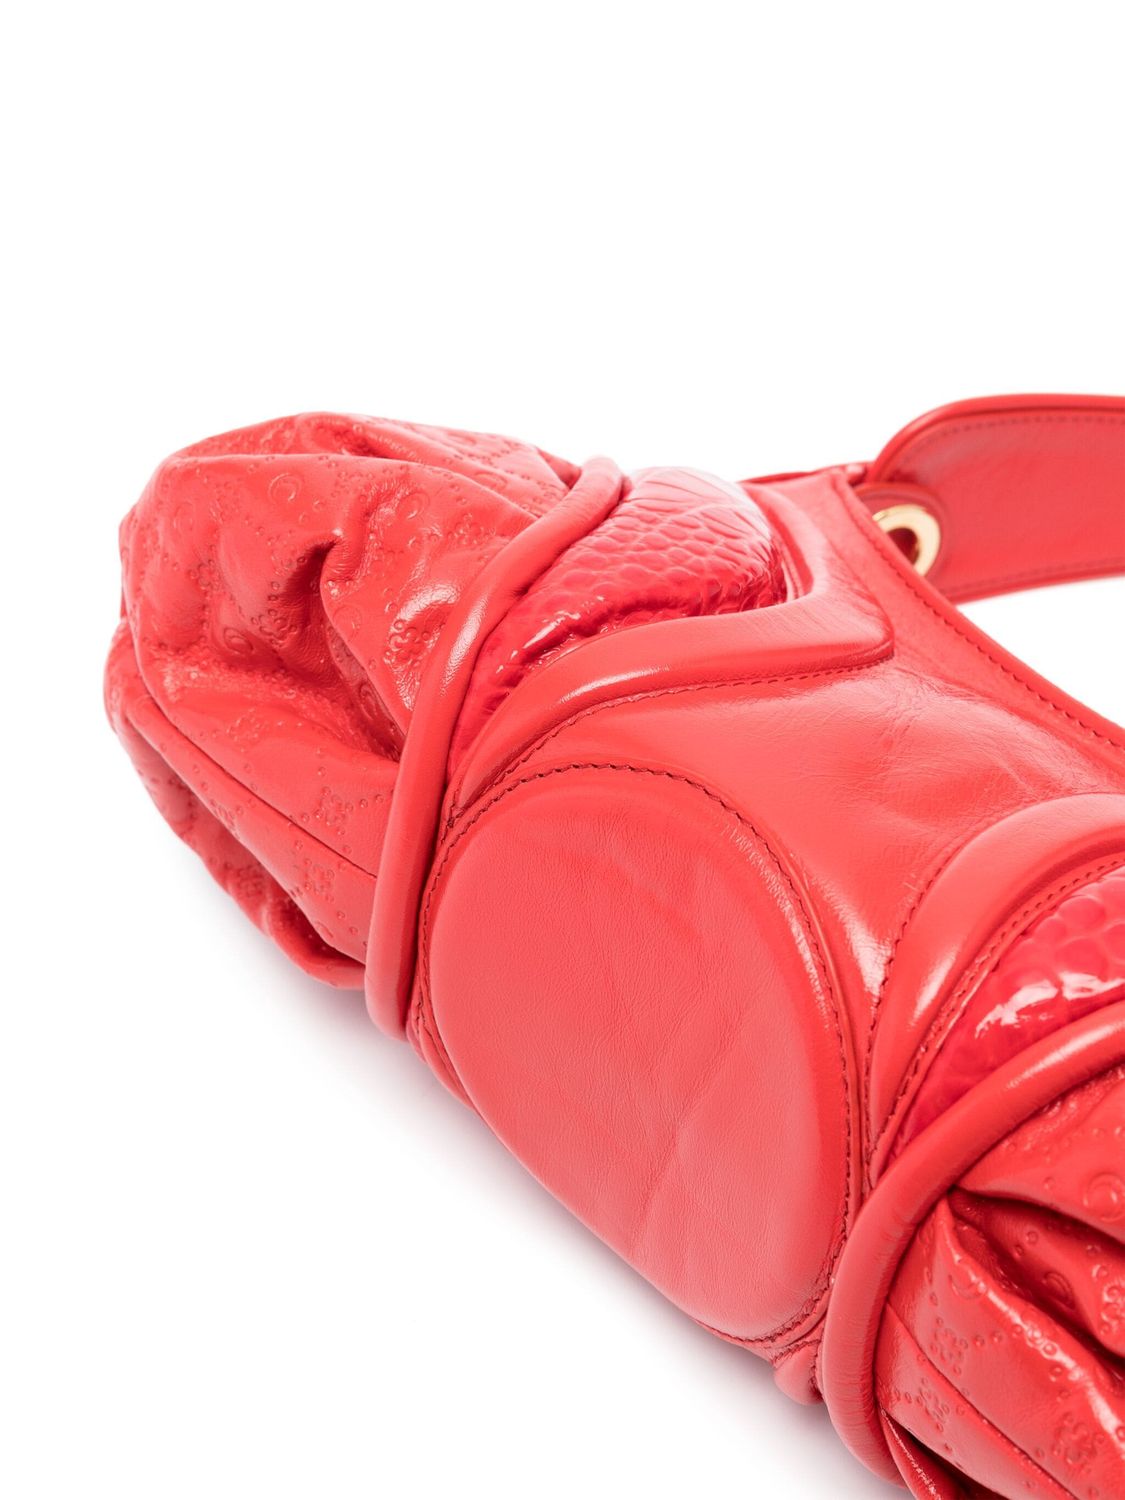 MARINE SERRE Cardinal Red Panel Handbag with Signature Moonogram Motif and Embossed Crocodile Skin Effect